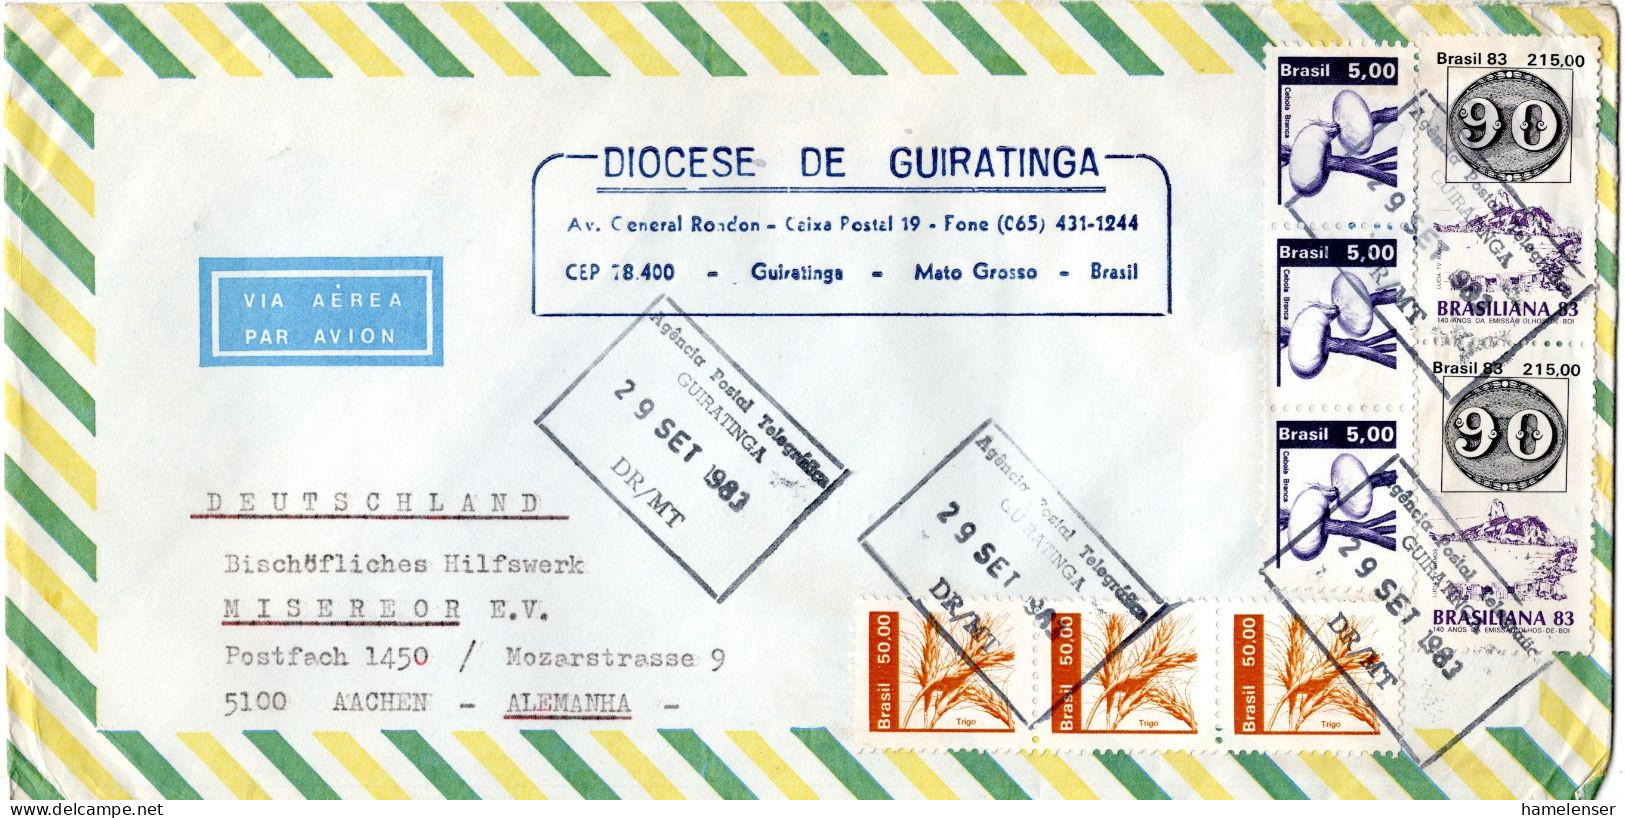 L75020 - Brasilien - 1983 - 2@Cr215,00 Brasiliana '83 MiF A LpBf GUIRATINGA -> Westdeutschland - Lettres & Documents